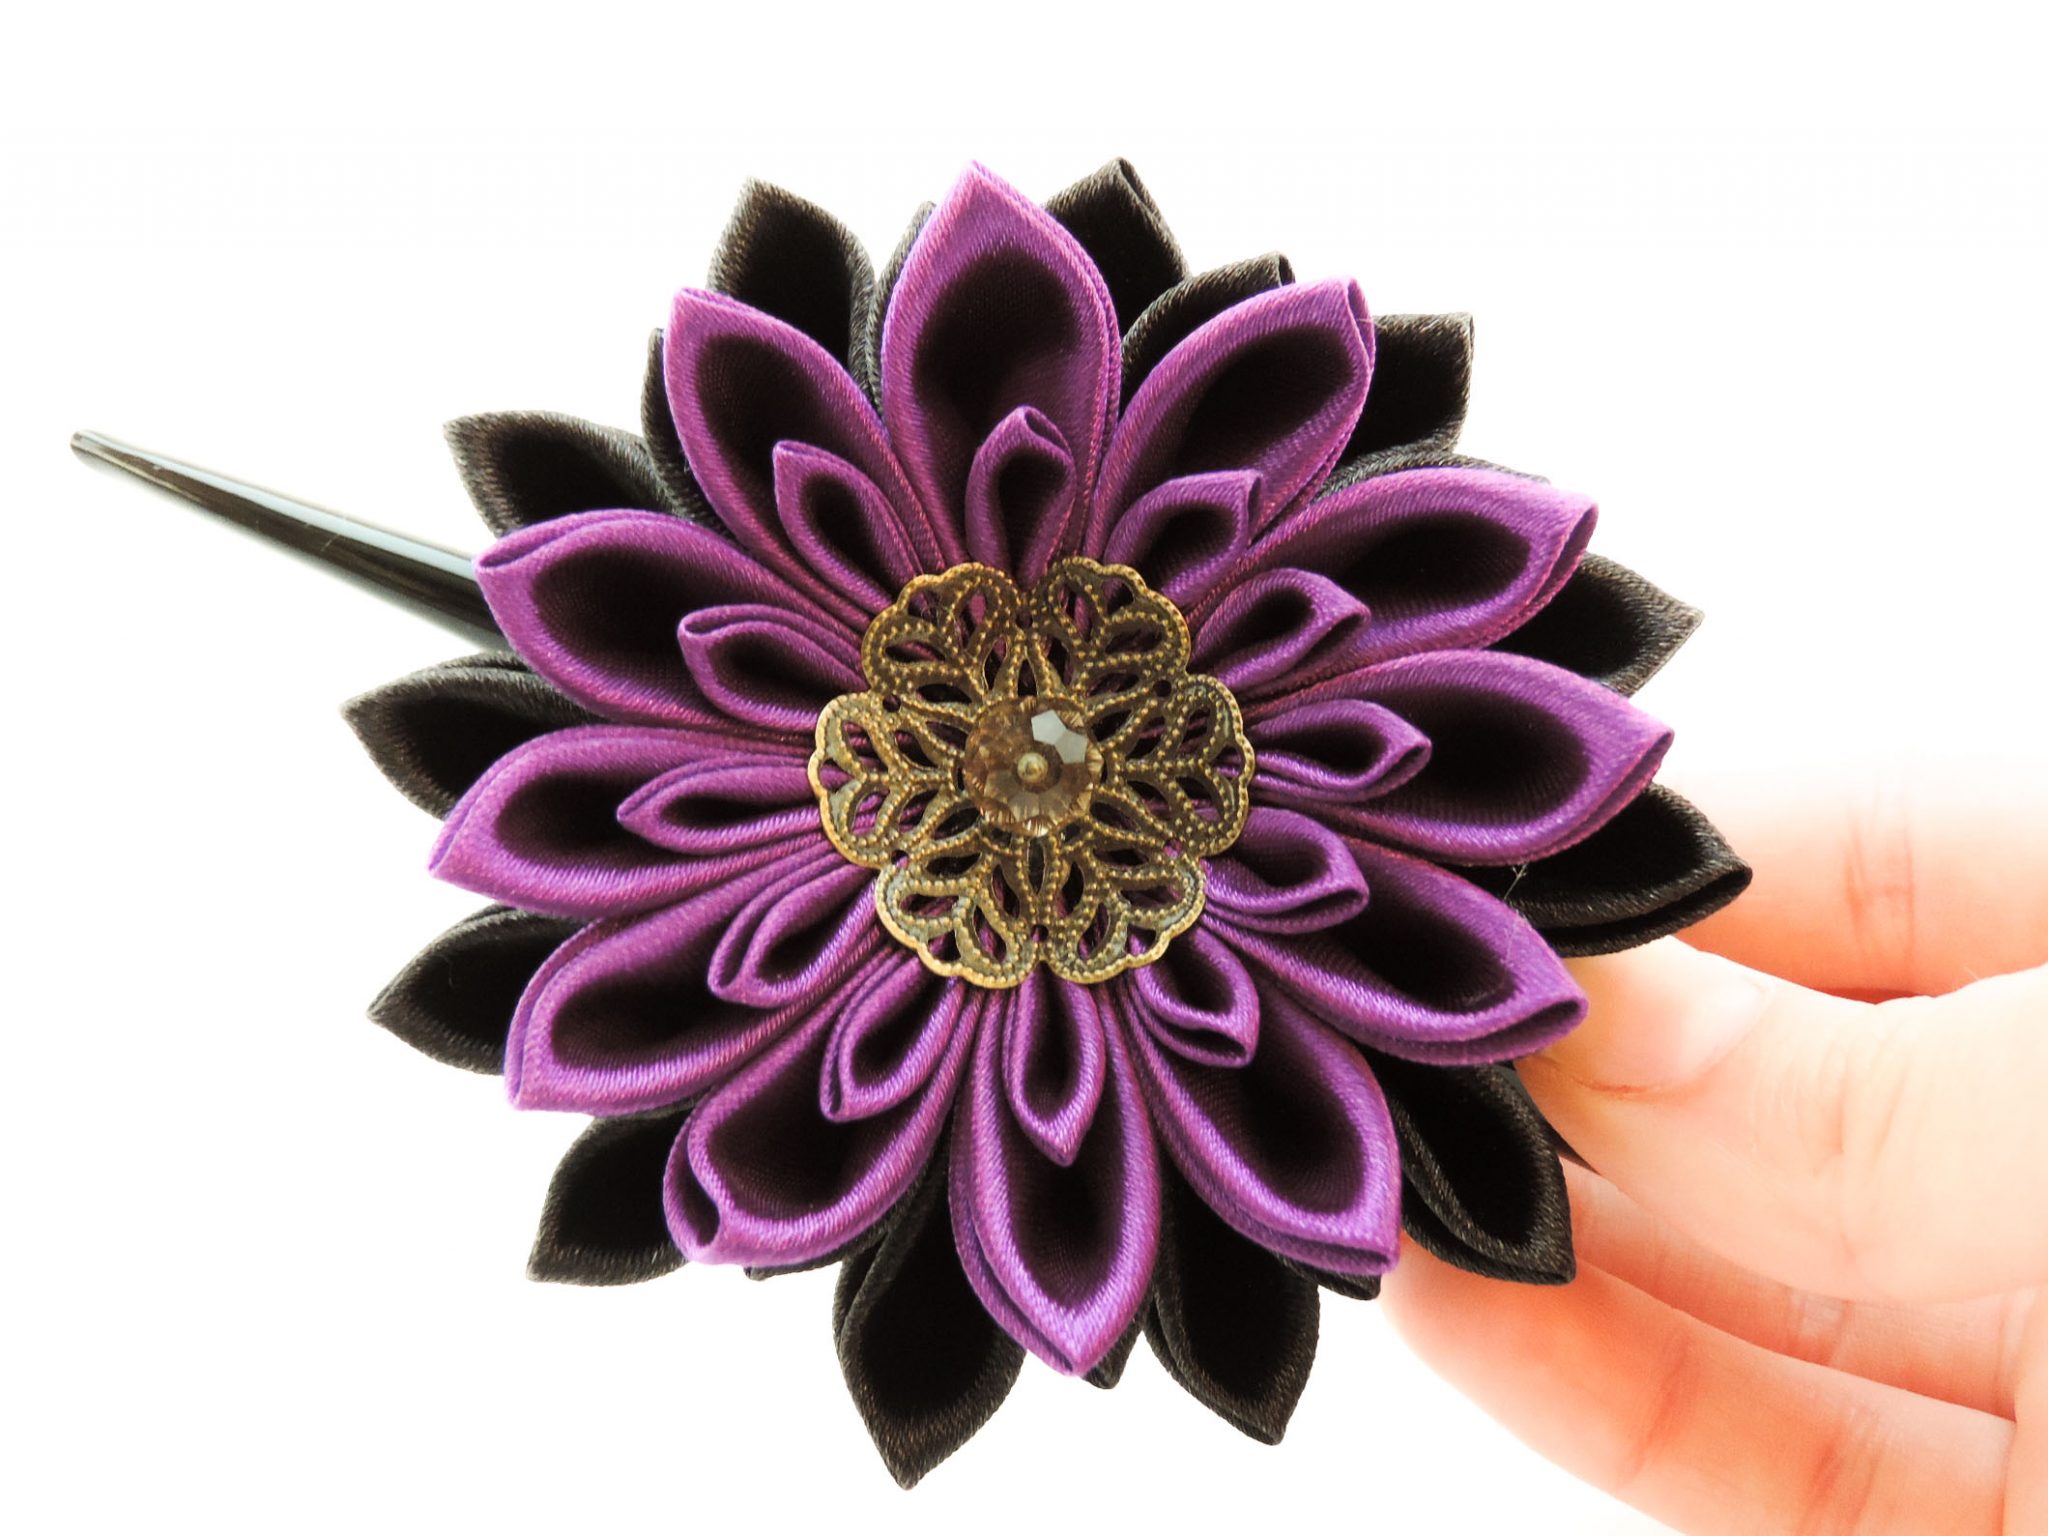 Black and purple satin chrysanthemum - DIY tutorial